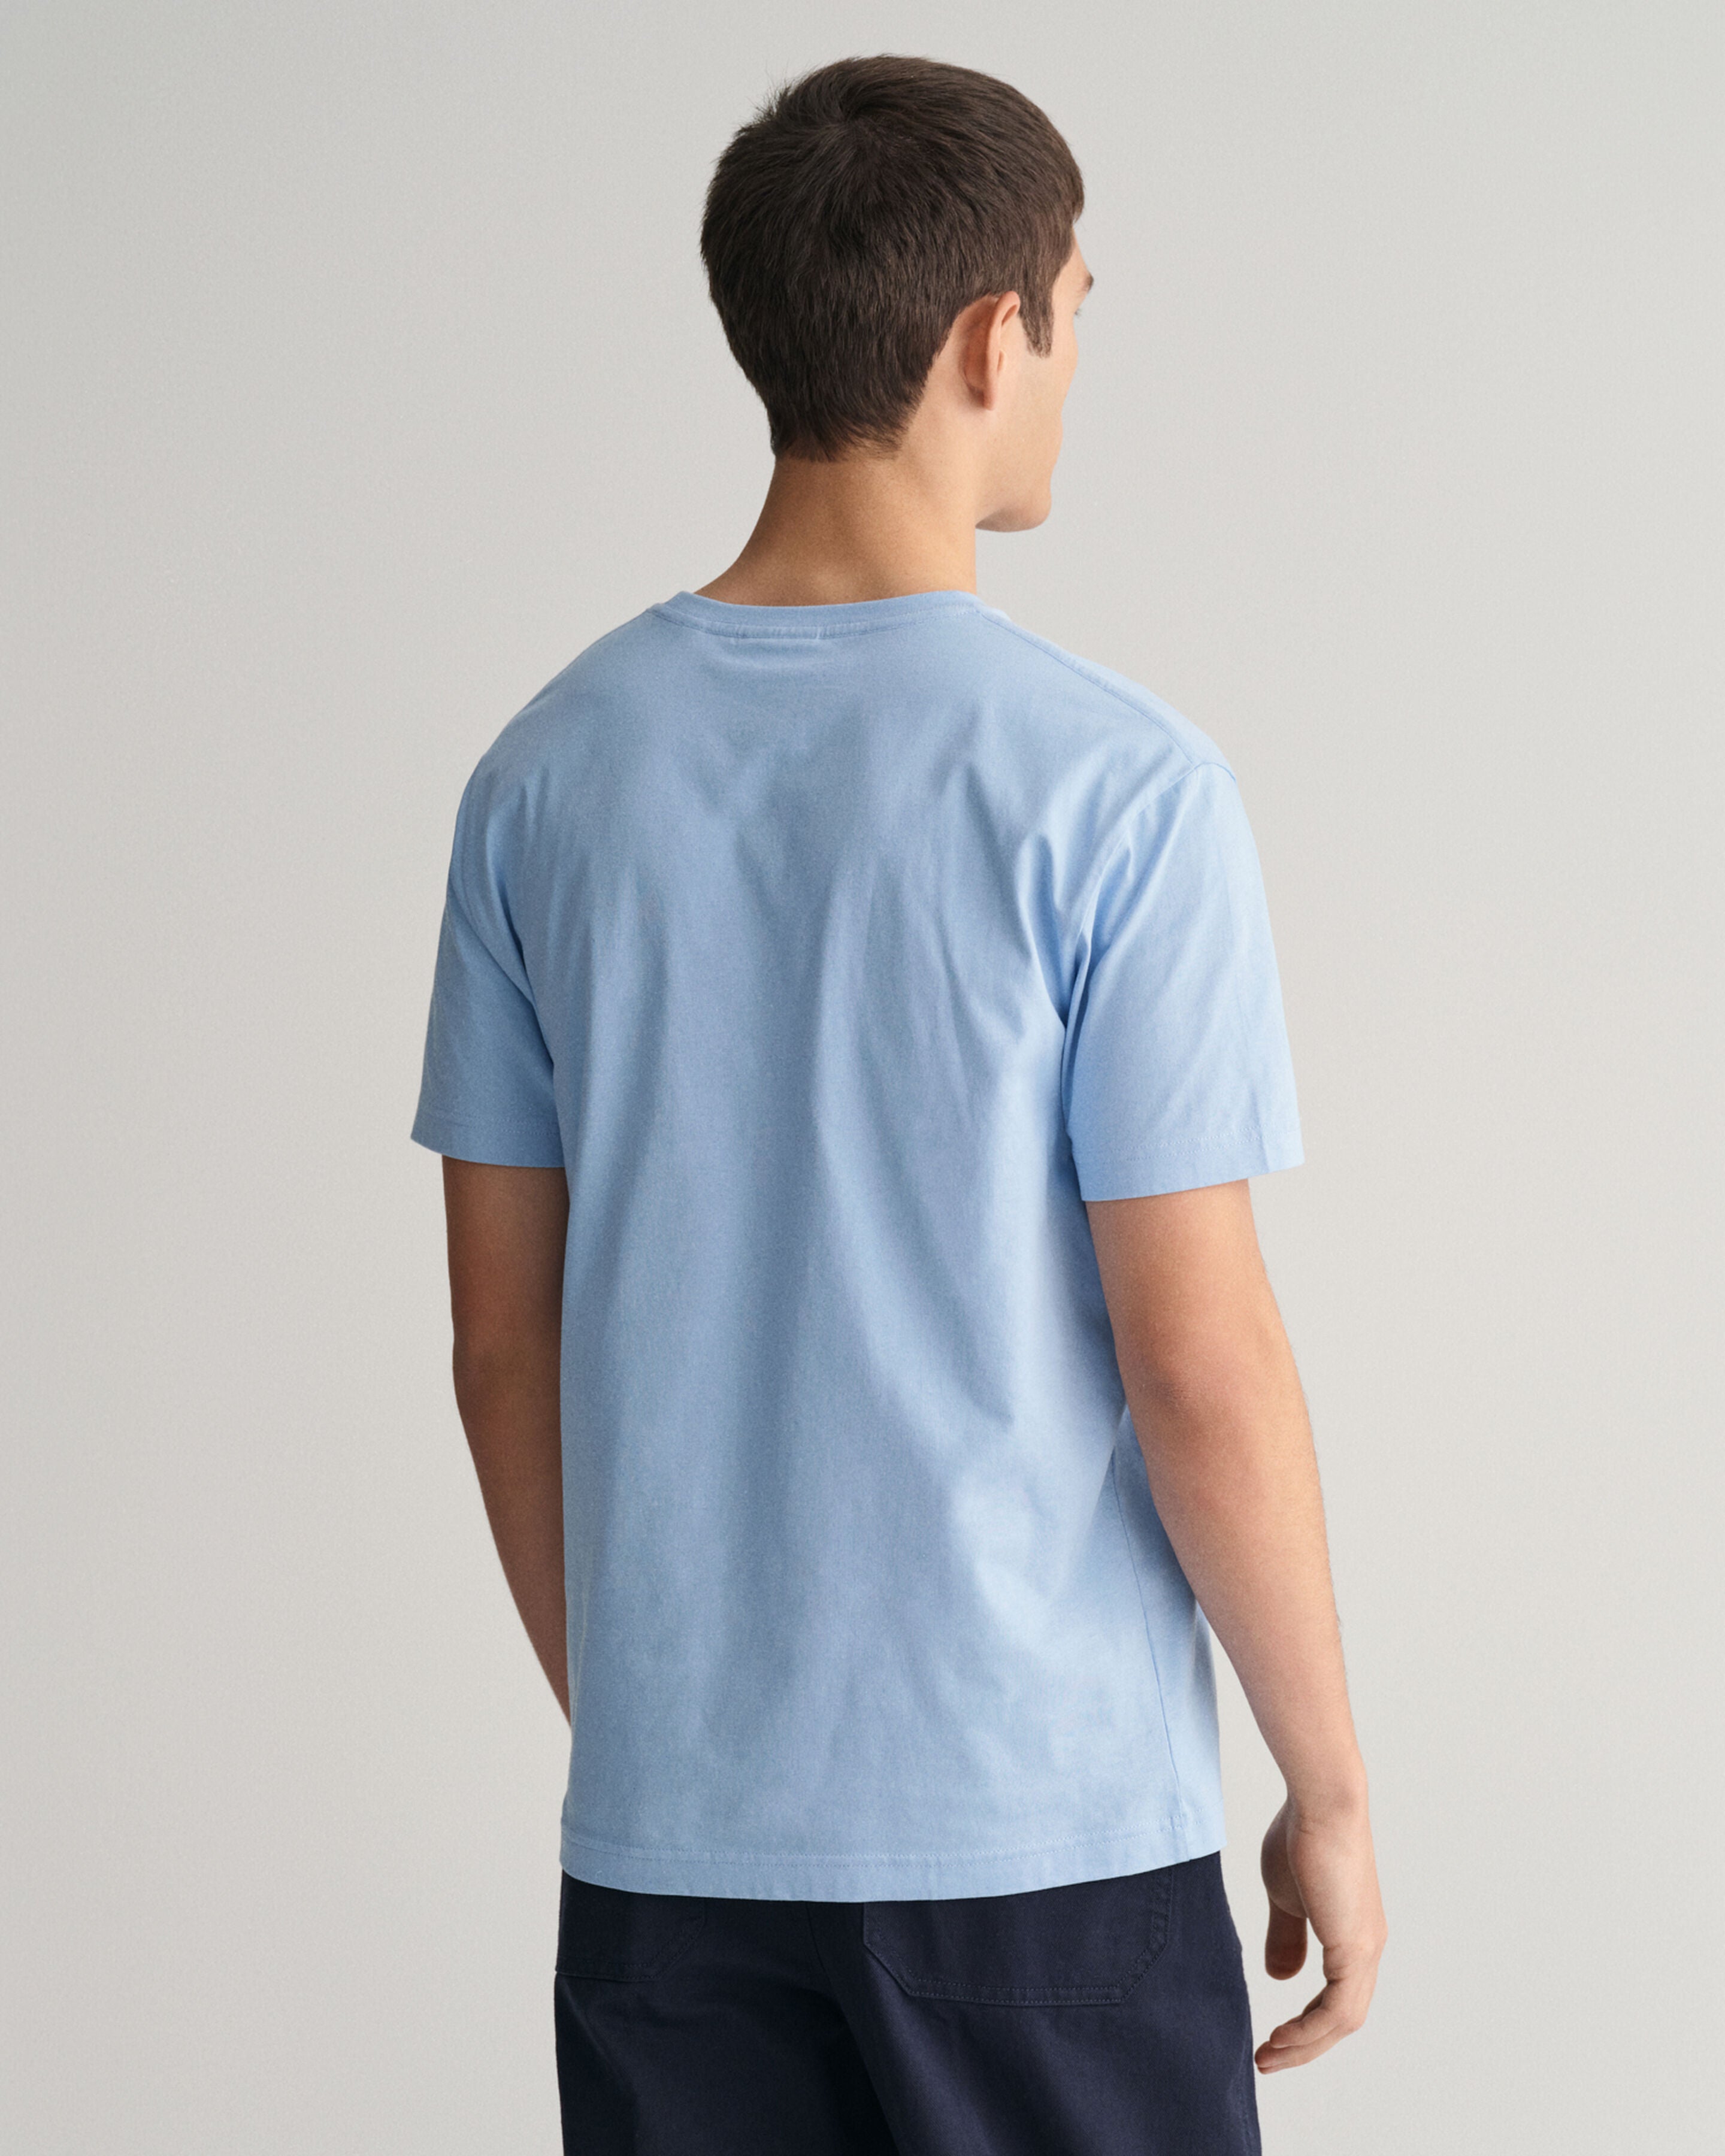 GANT - Regular Fit Shield T-Shirt in Dove Blue 2003184 474